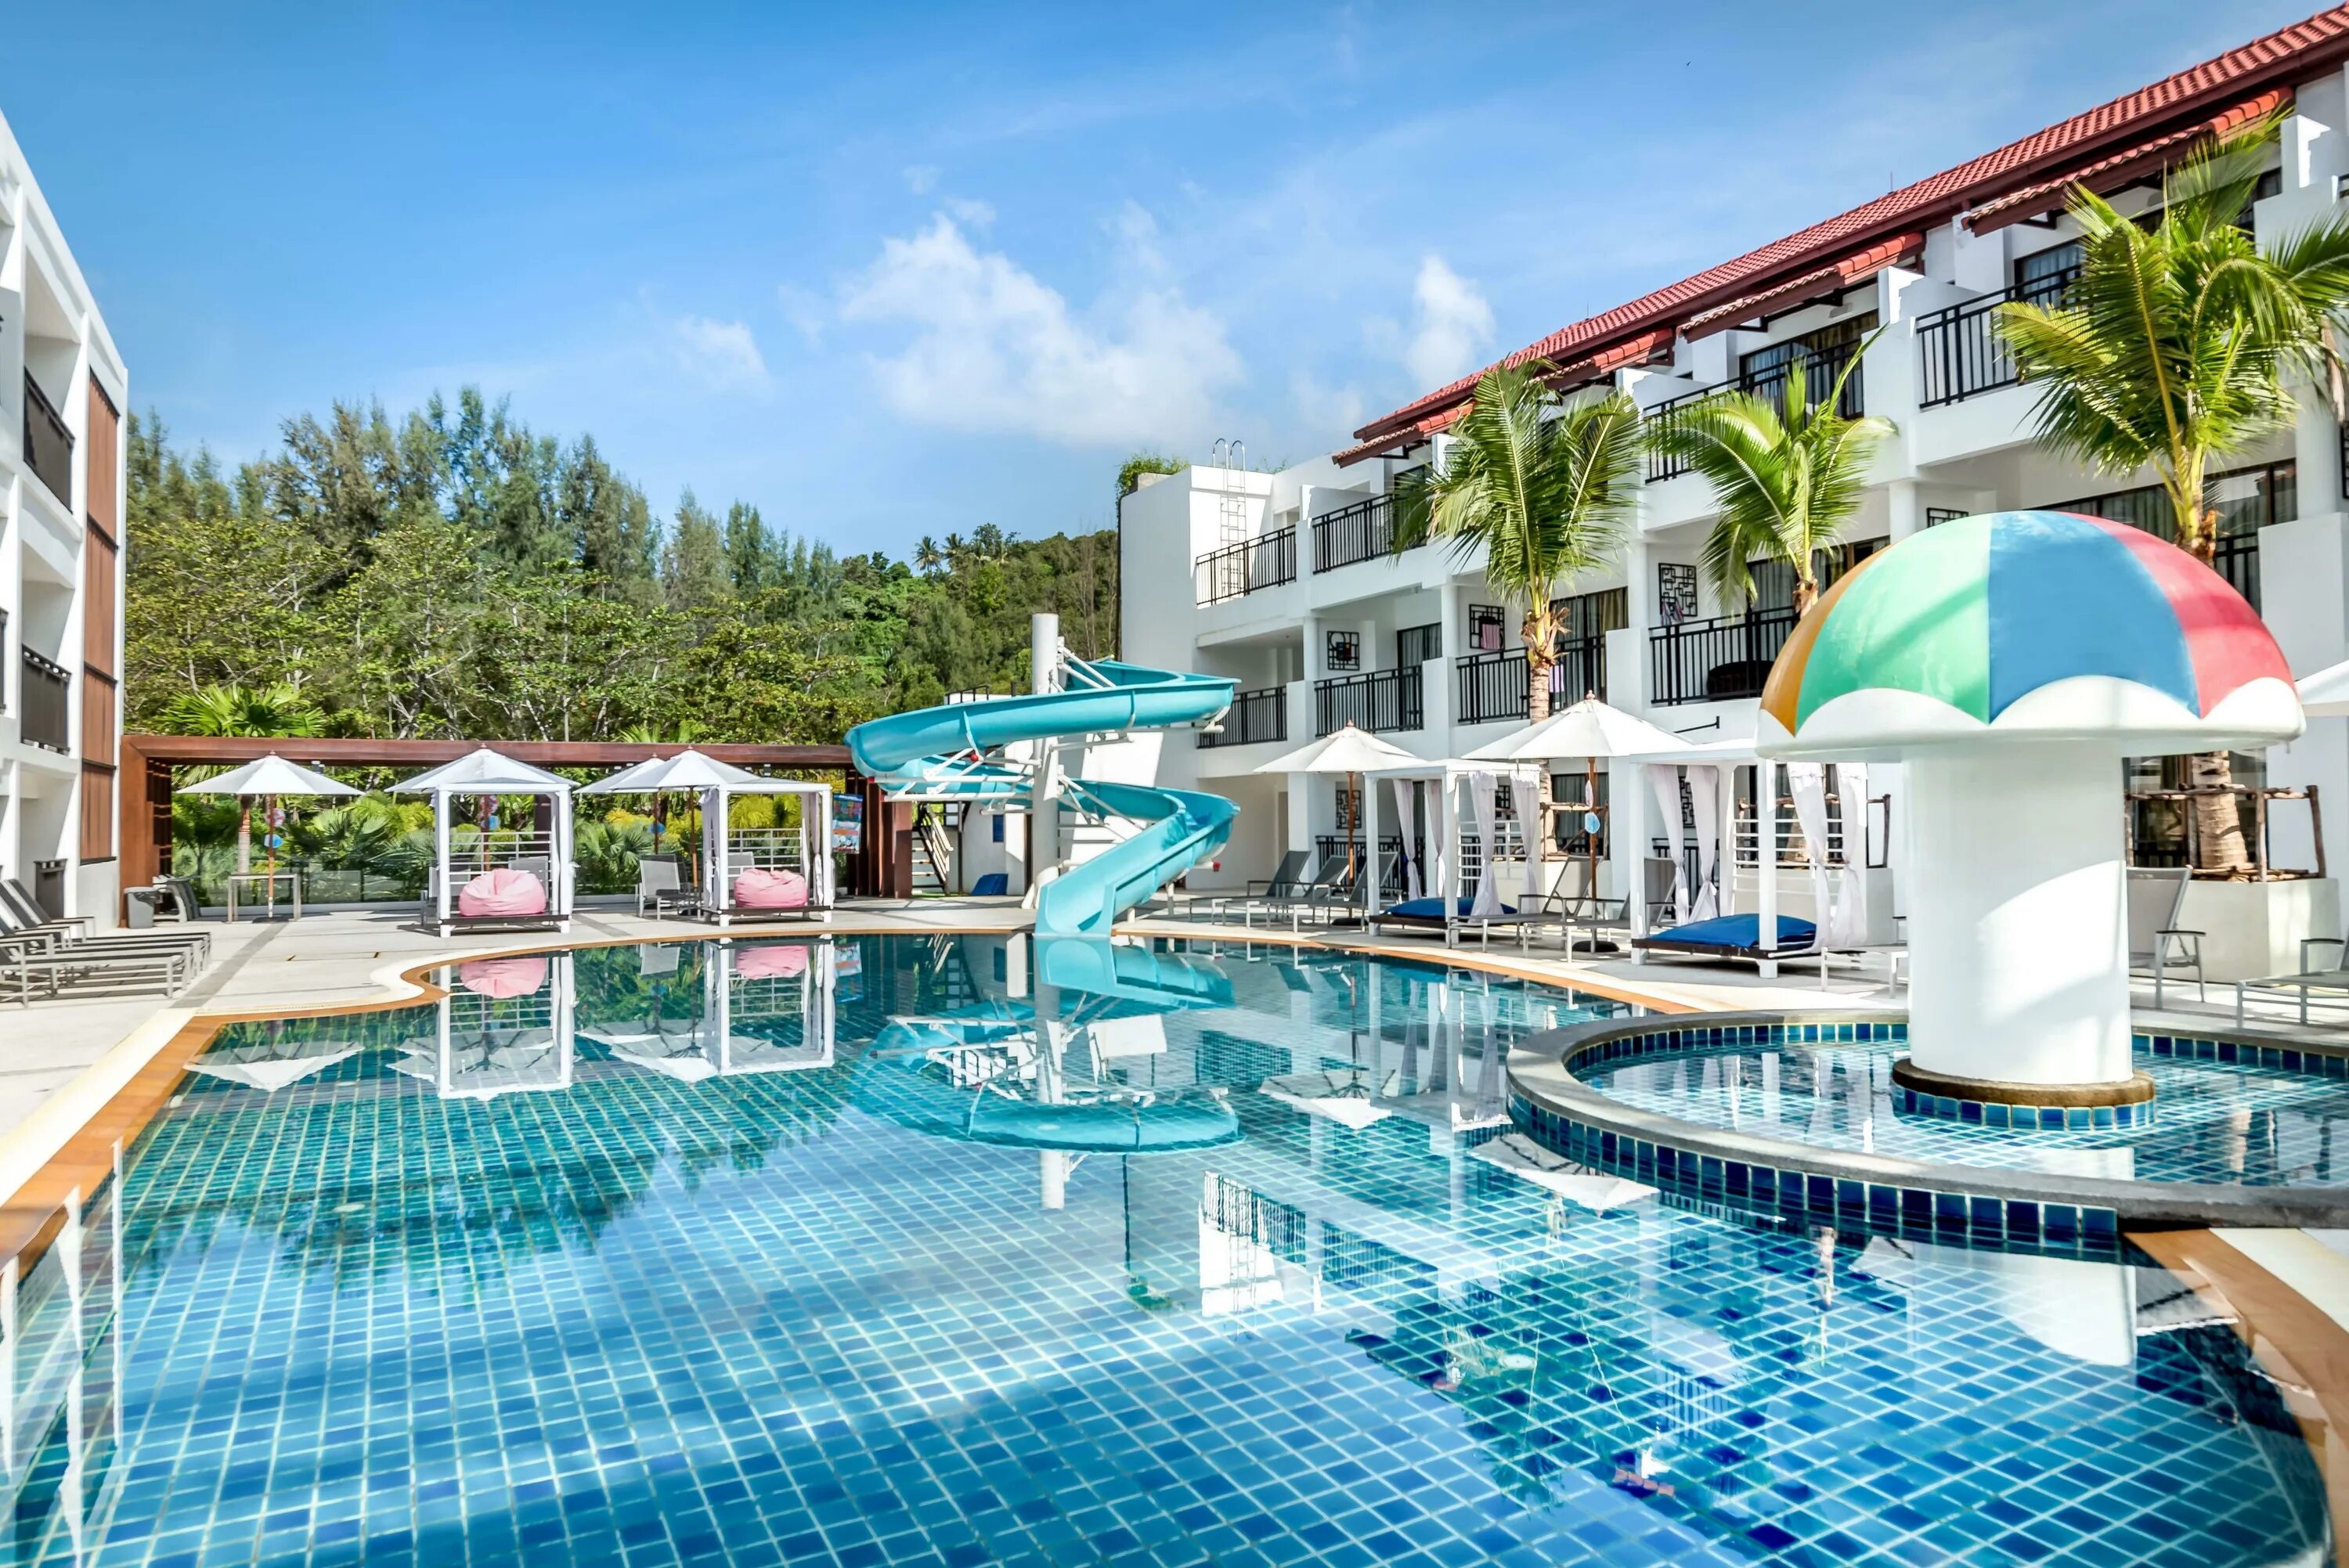 Karon beach resort spa 4. Карон Бич Резорт Пхукет. Novotel Phuket Karon. Novotel Phuket Karon 4. Phuket Karon Beach Resort Spa 4.